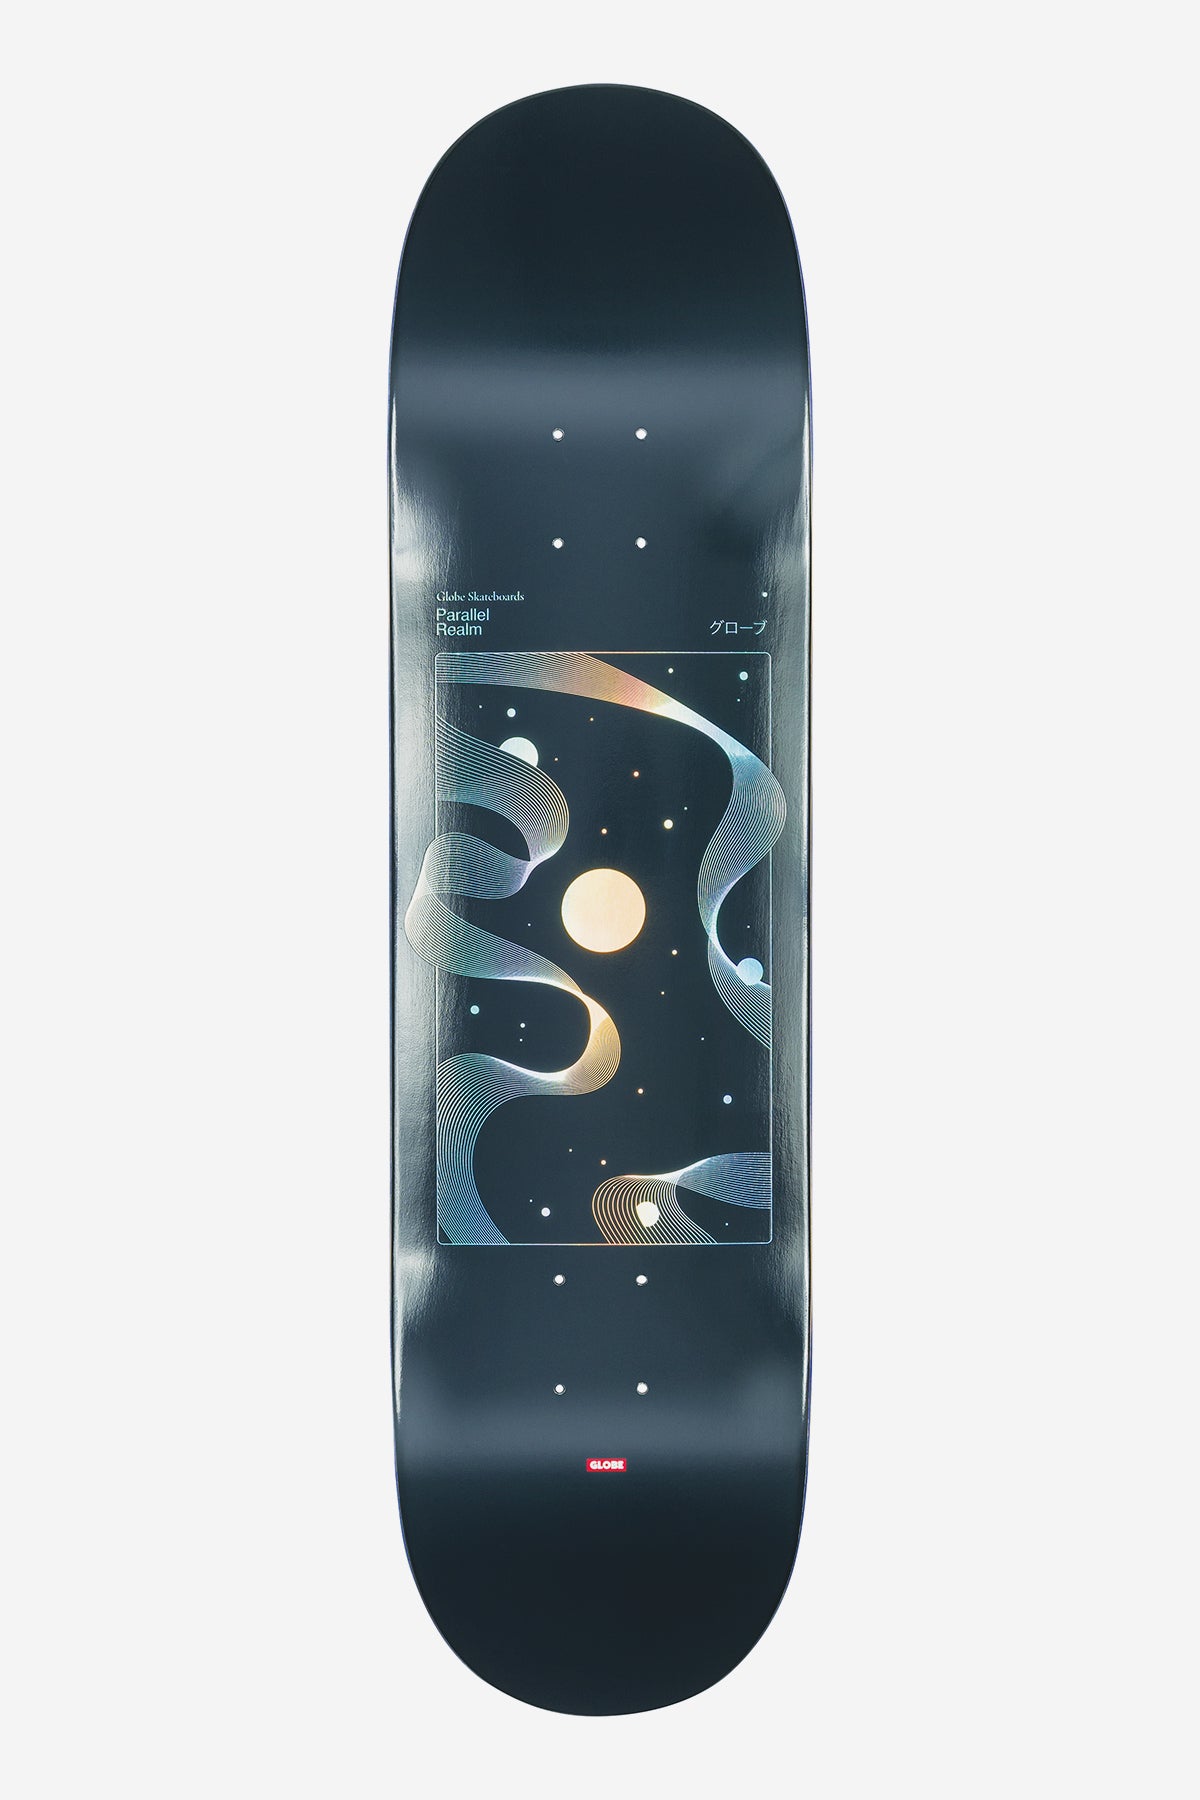 Globe - G2 Parallel - Midnight Prism/Realm - 8.25" Skateboard Deck